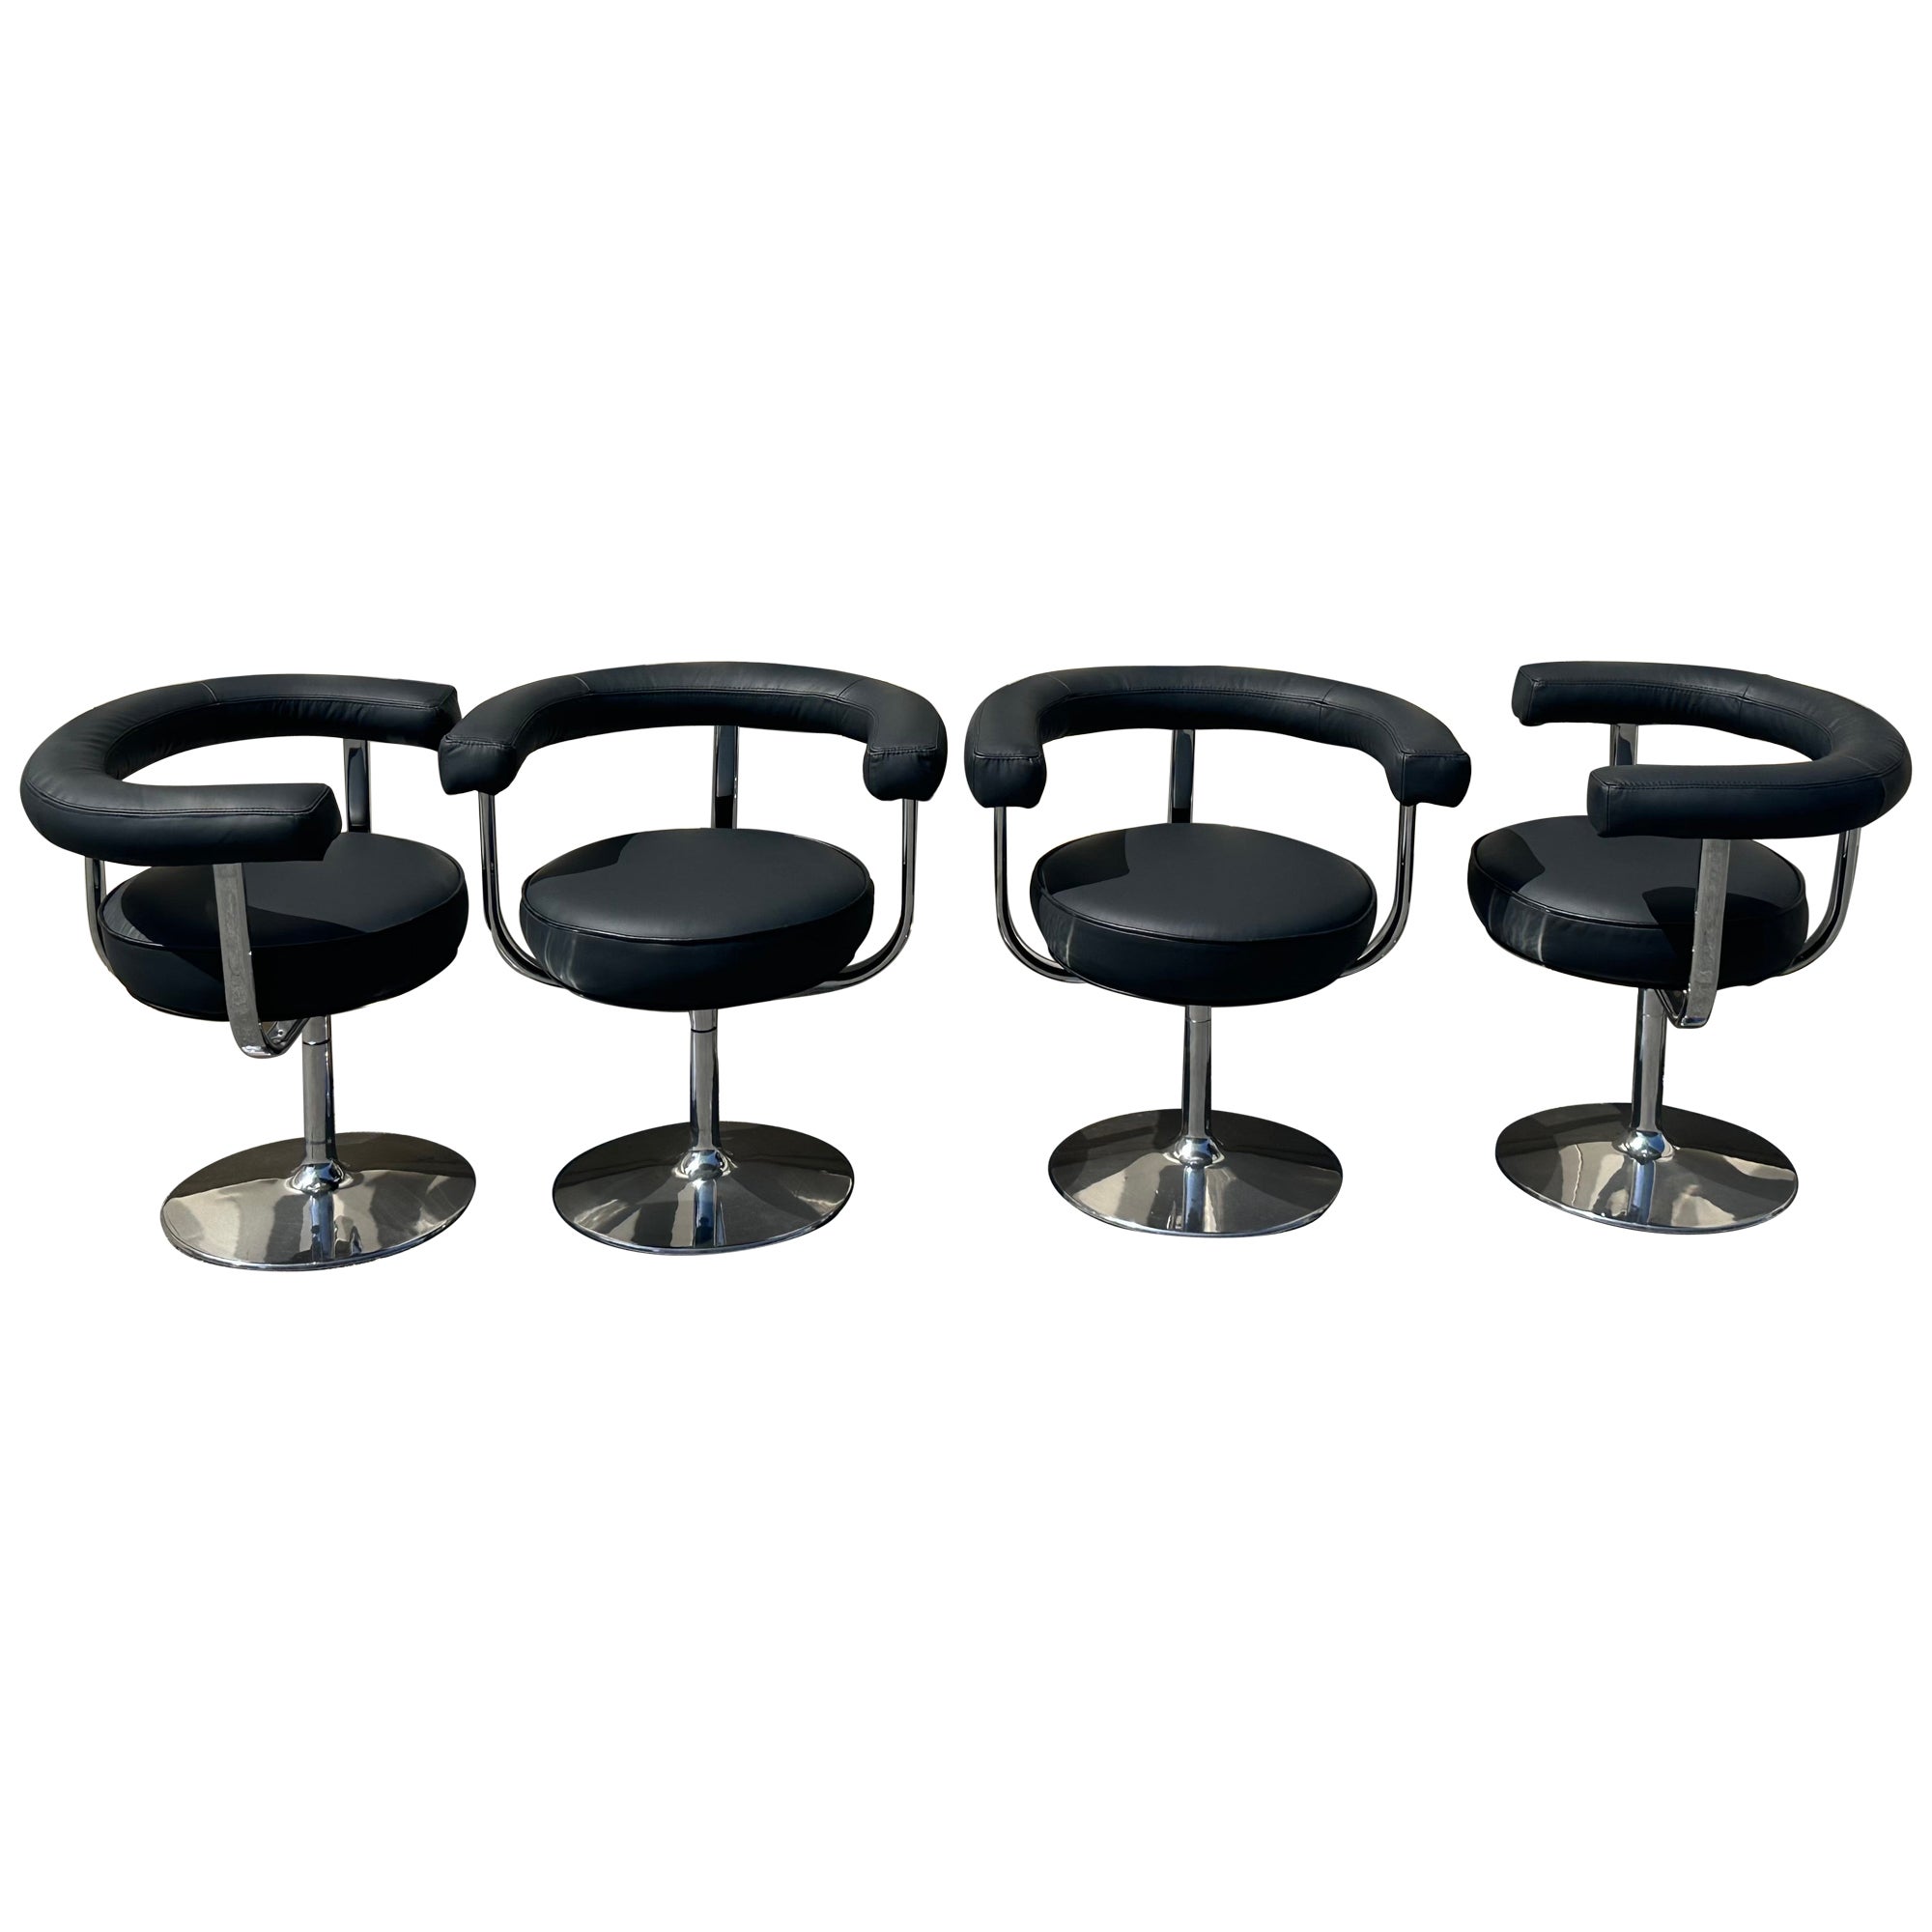 Set of Four Chrome & Leather "Polar" Chairs by Esko Pajamies for Lepo Finn For Sale